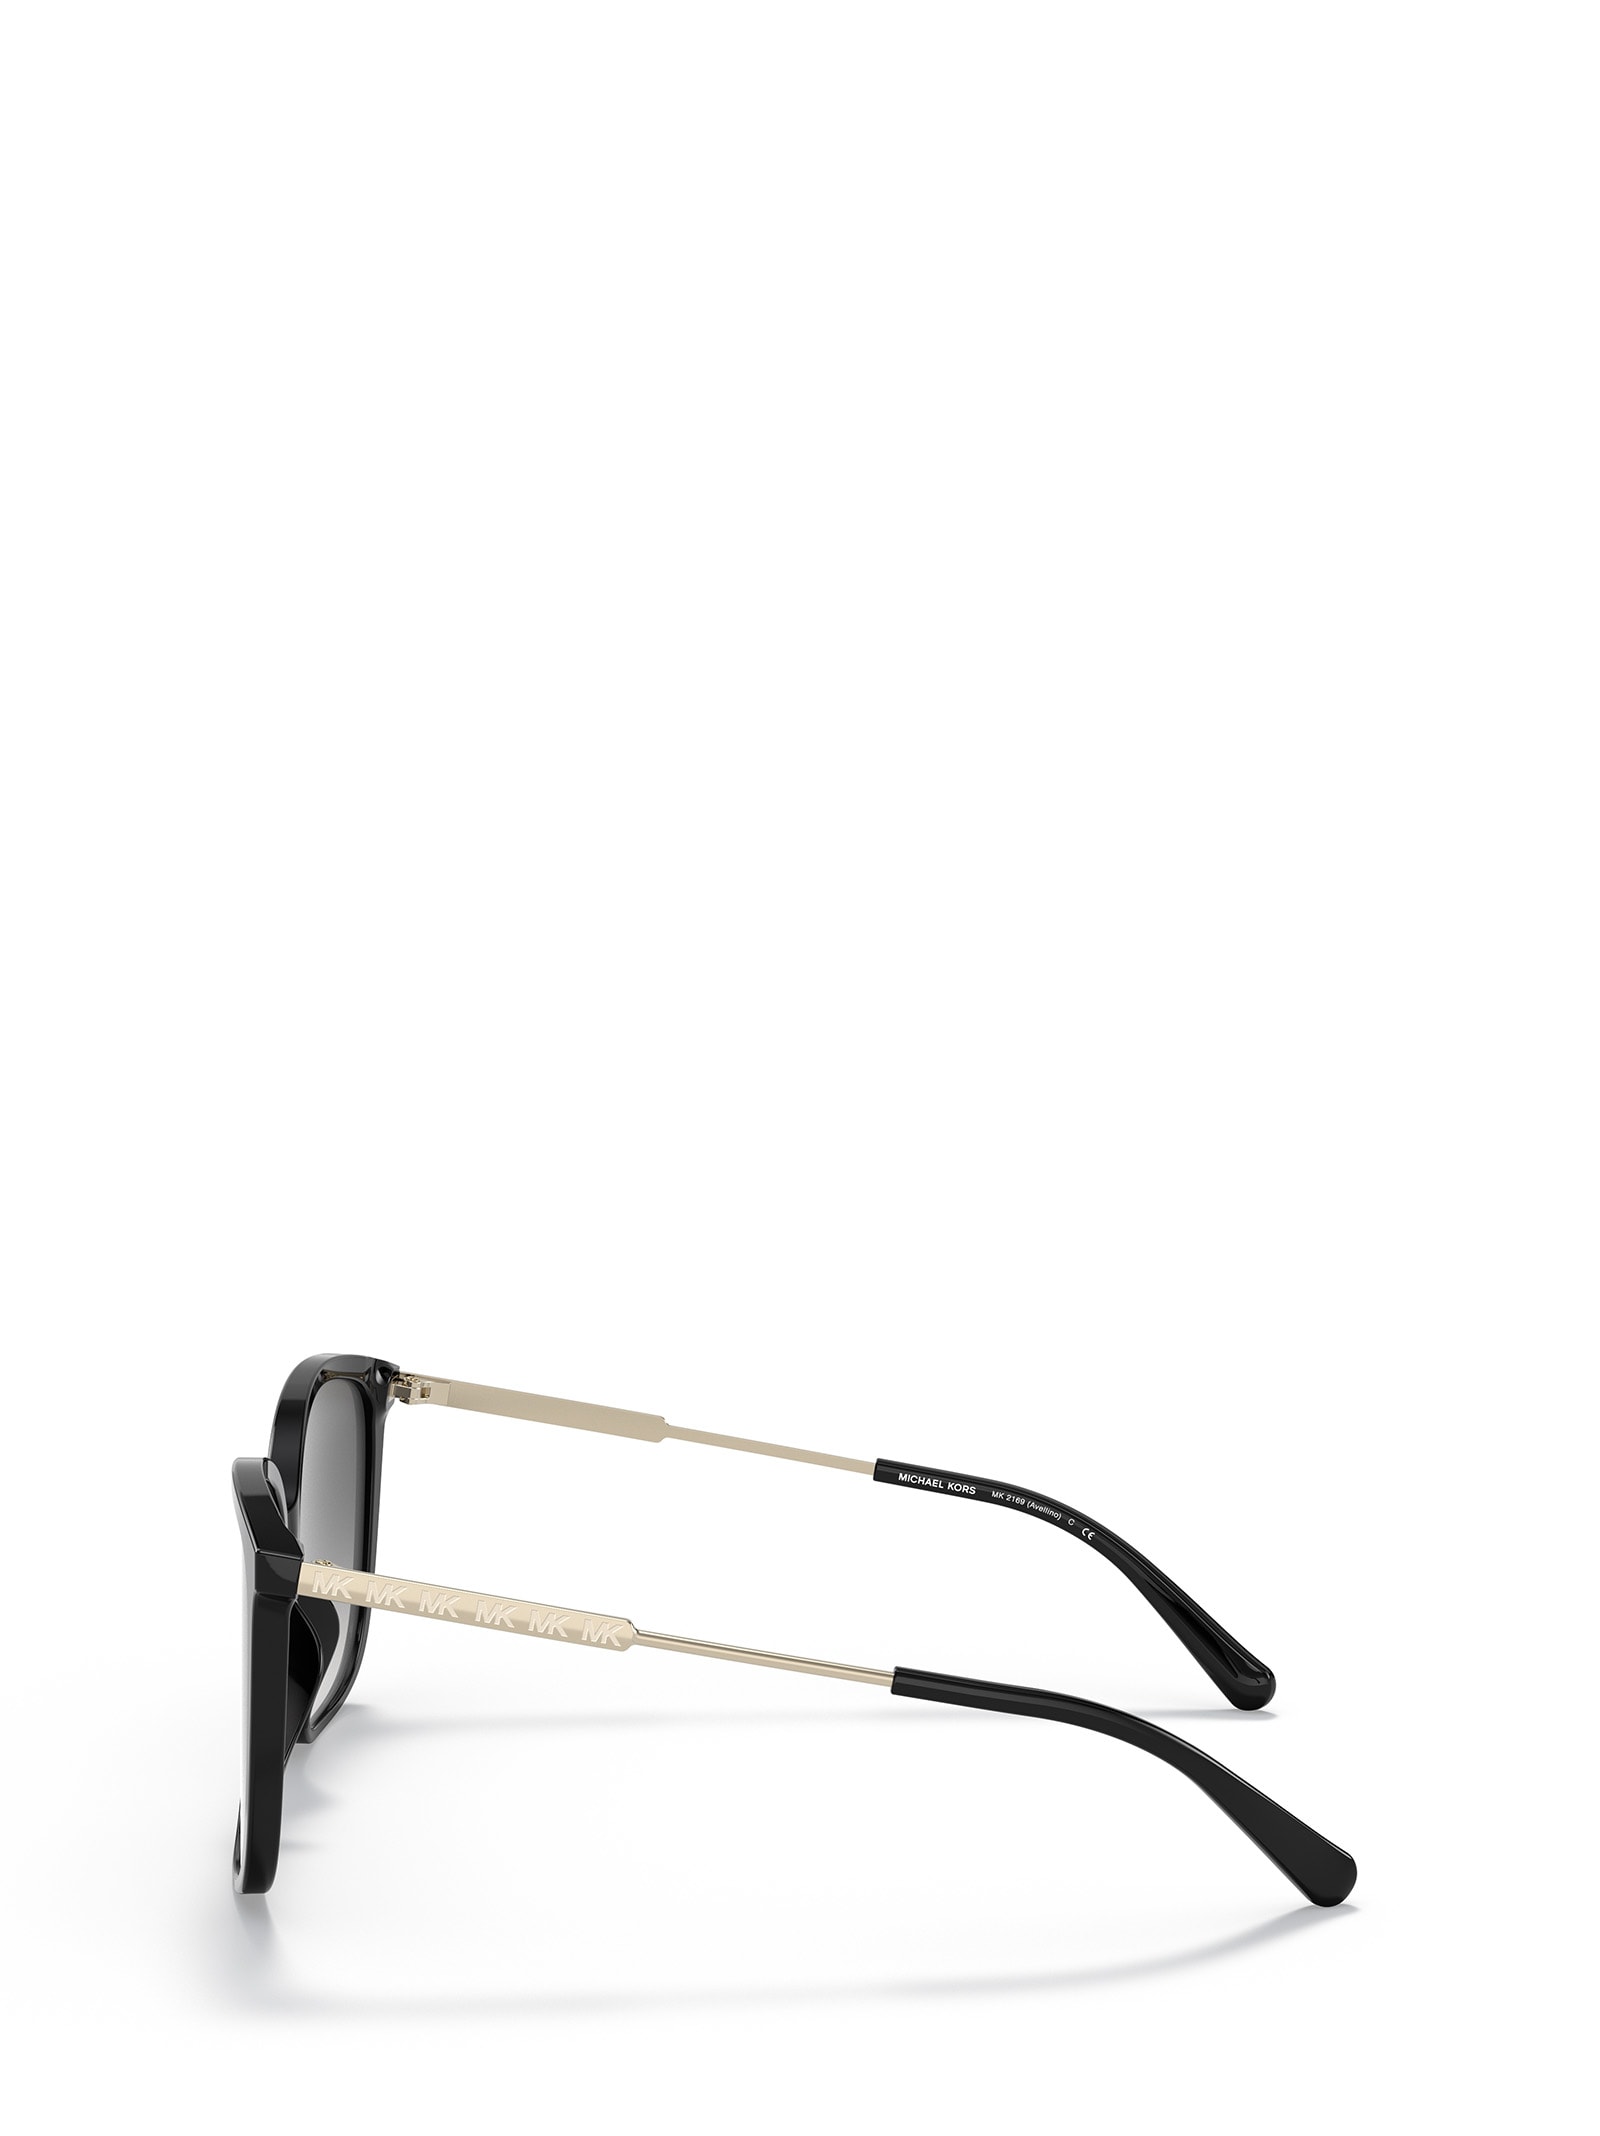 Shop Michael Kors Mk2169 Black Sunglasses